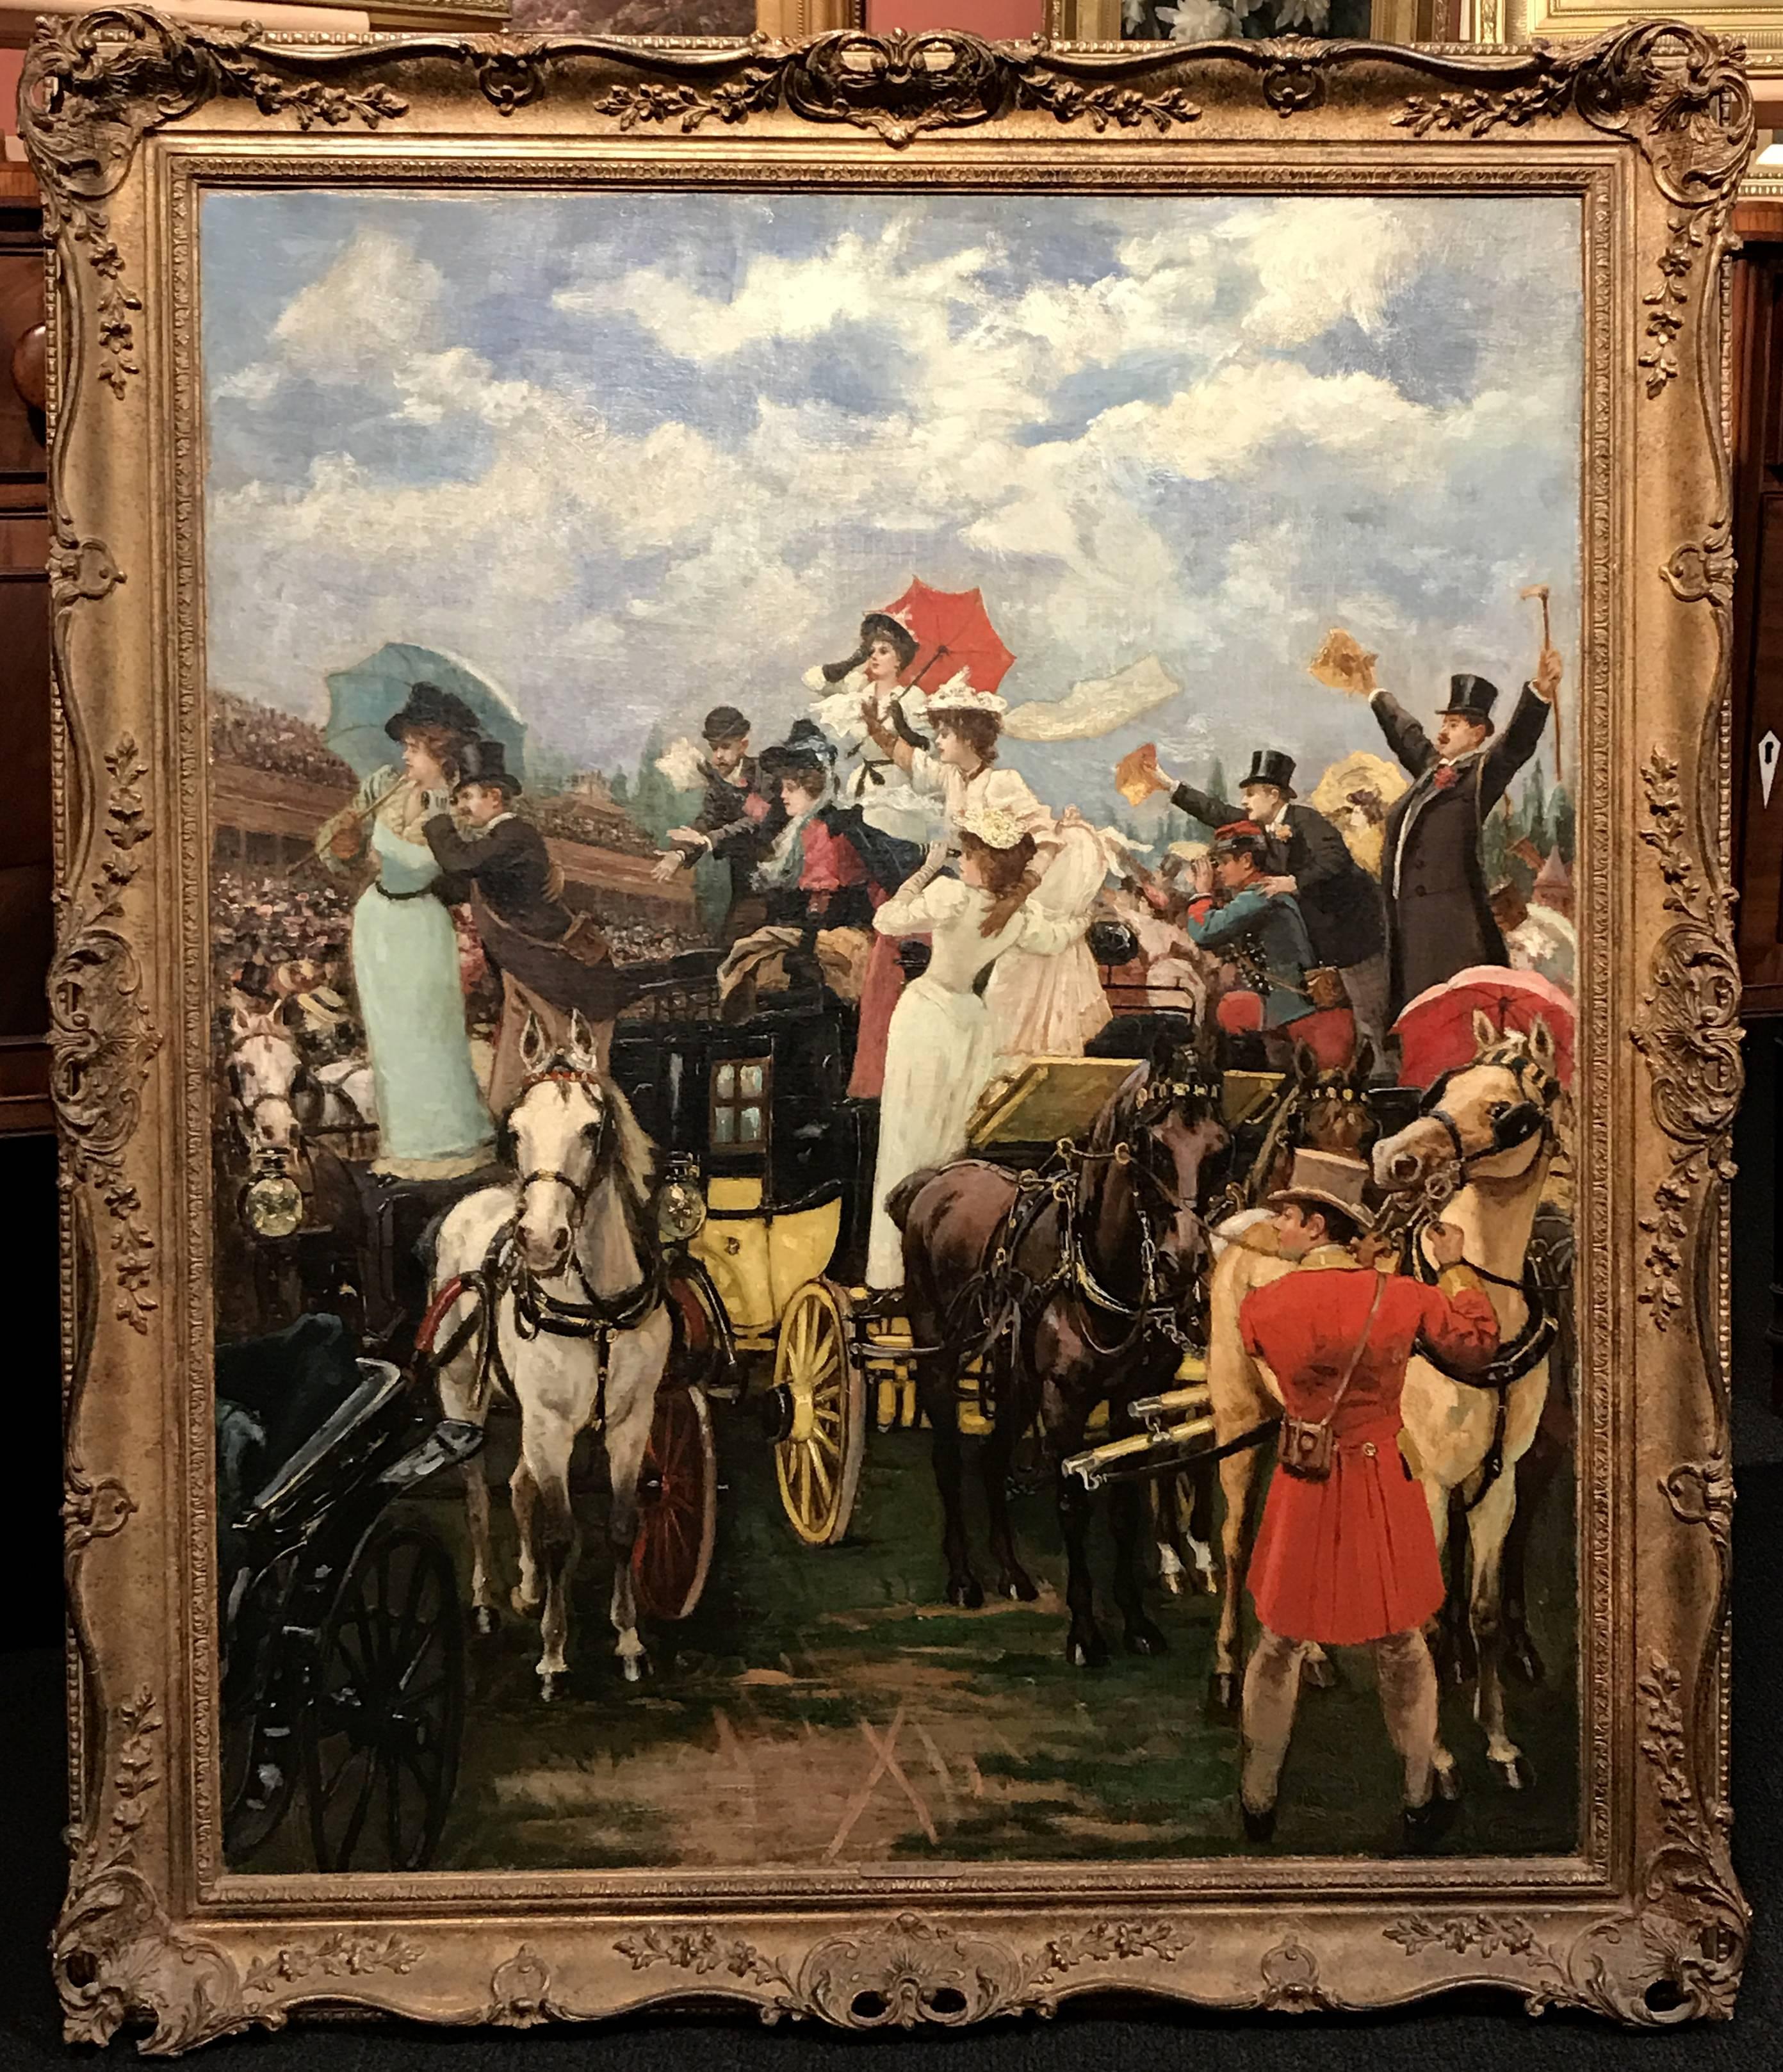 This exceptional oil painting of the Royal Ascot in England was done by Austrian genre and portrait artist Gustave Wertheimer (1847-1904). Born in Vienna, Austria, Wertheimer began his studies at the Academy of Fine Arts in Vienna with Joseph Von